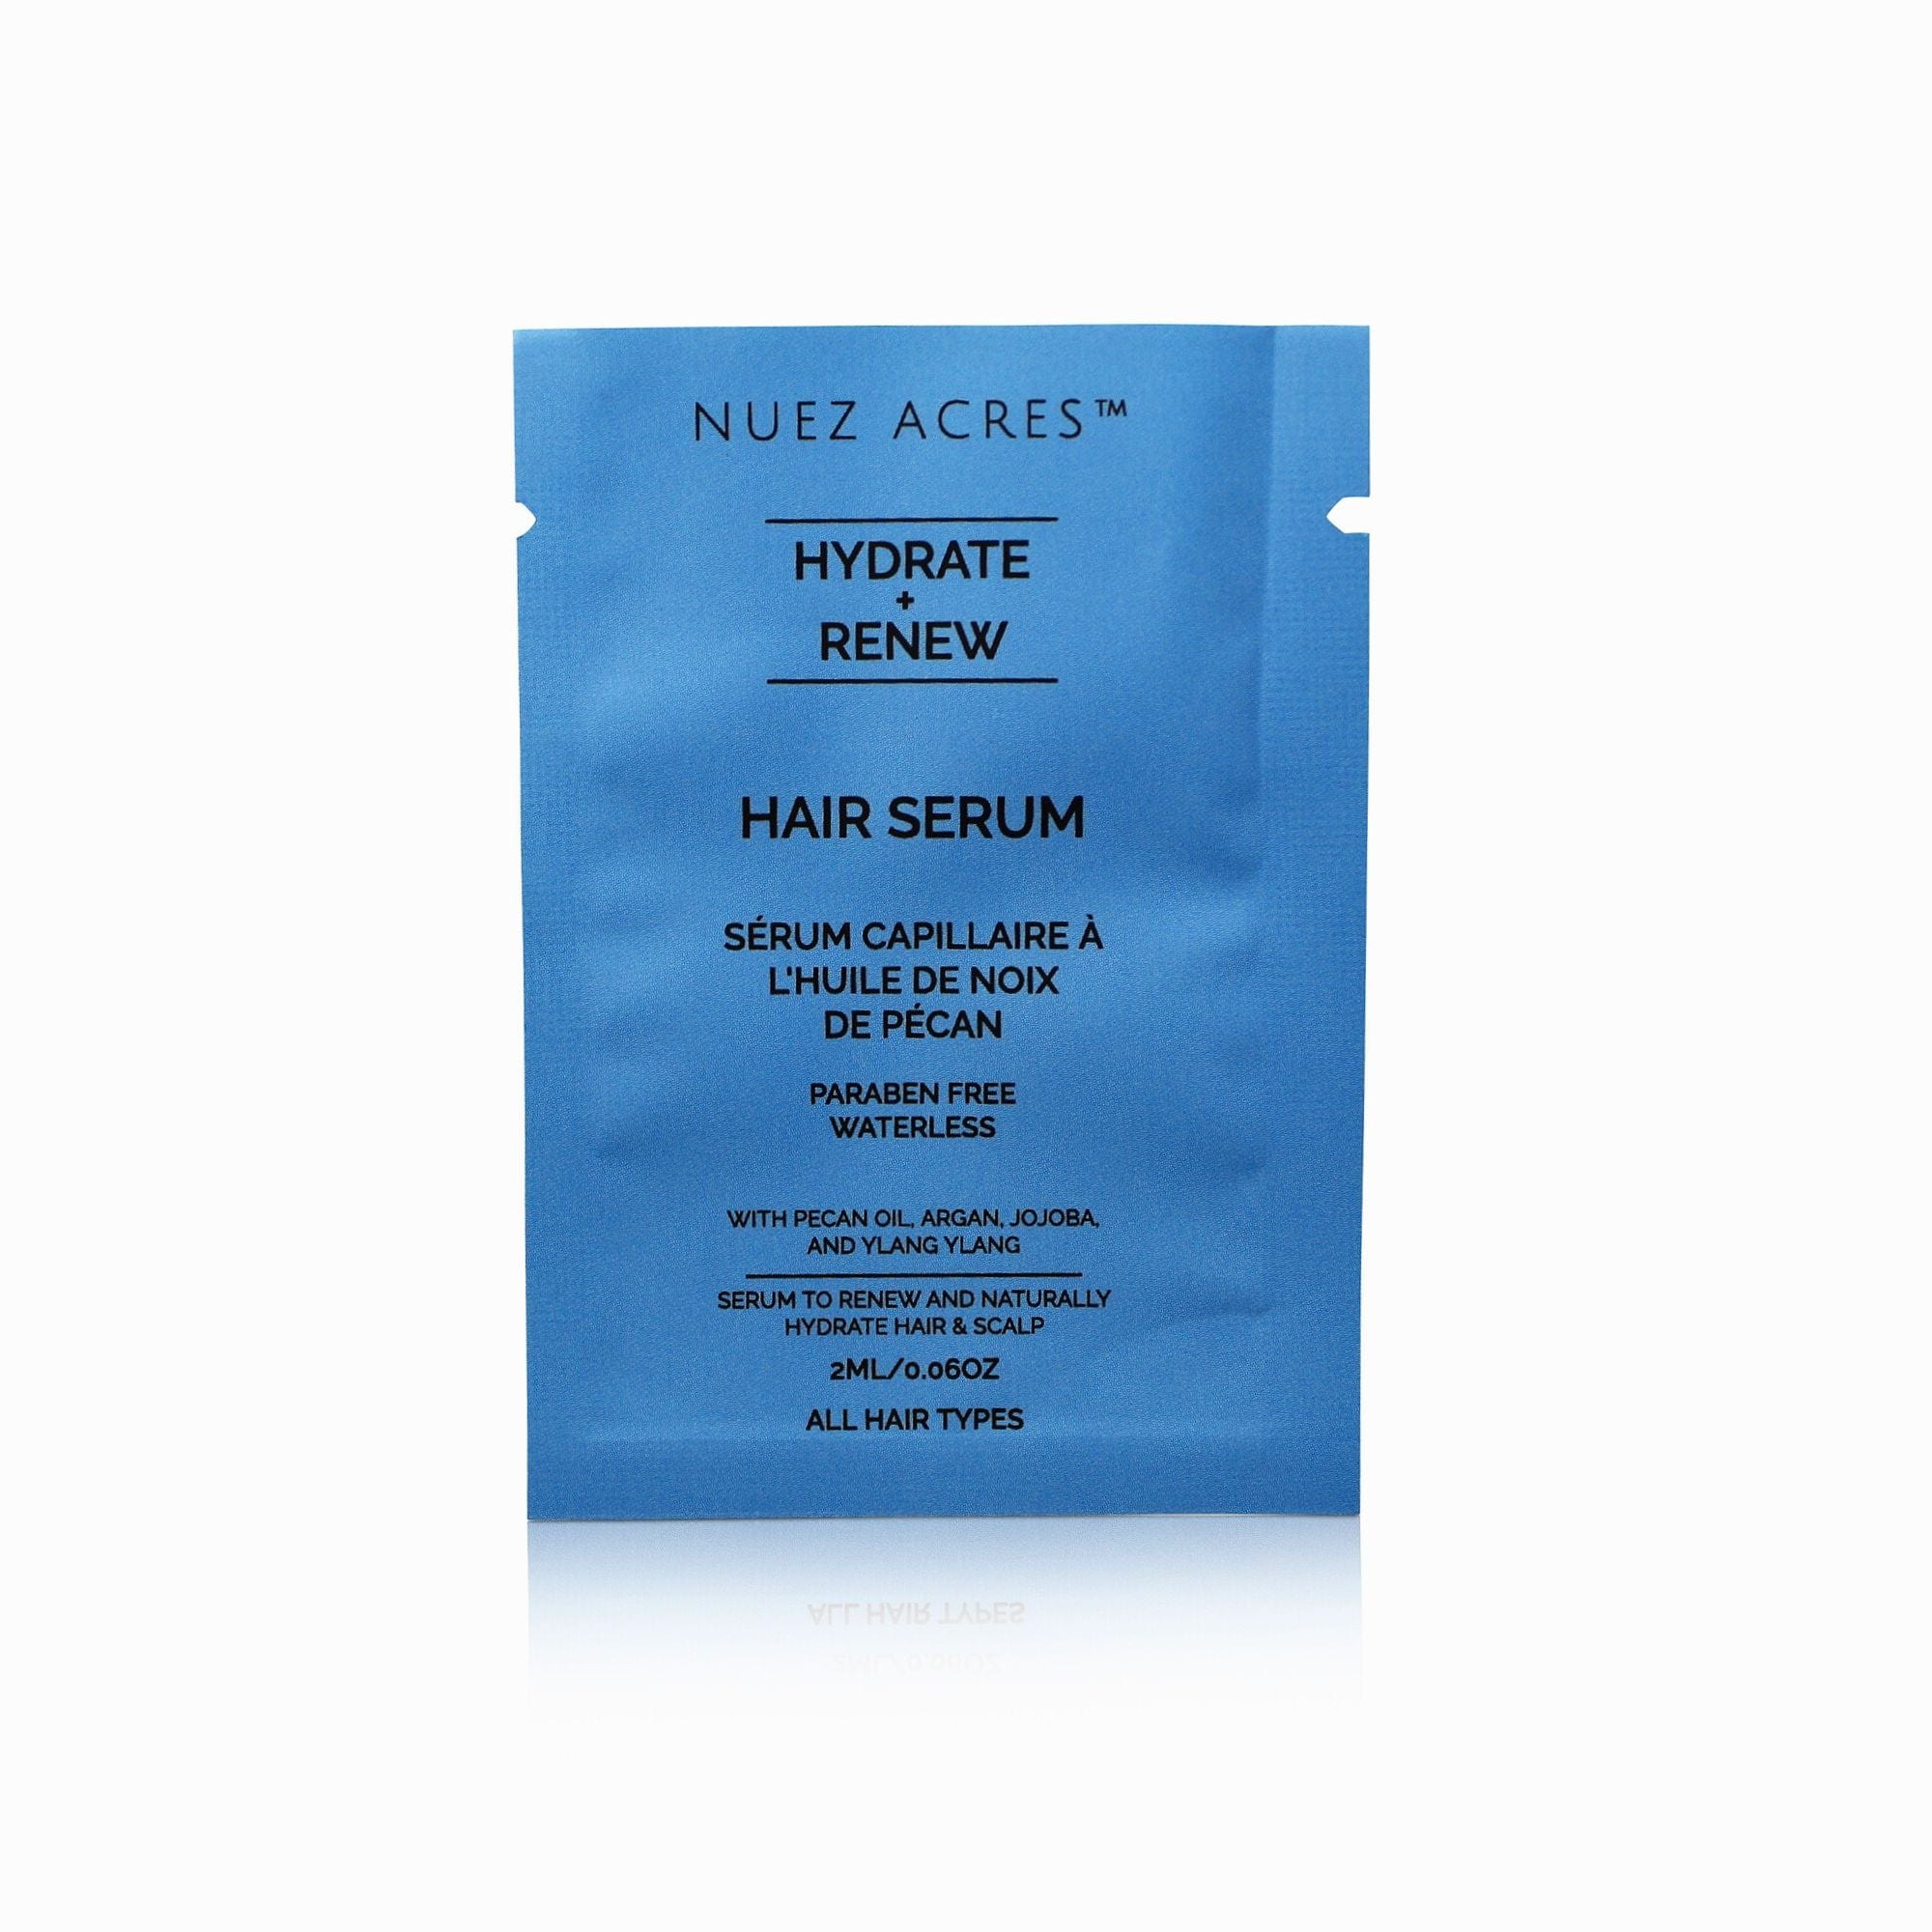 NUEZACRES Bundles Nuez Acres™ Essential Beauty SKin + Hair Sampler – 2ml Each Sample Sets